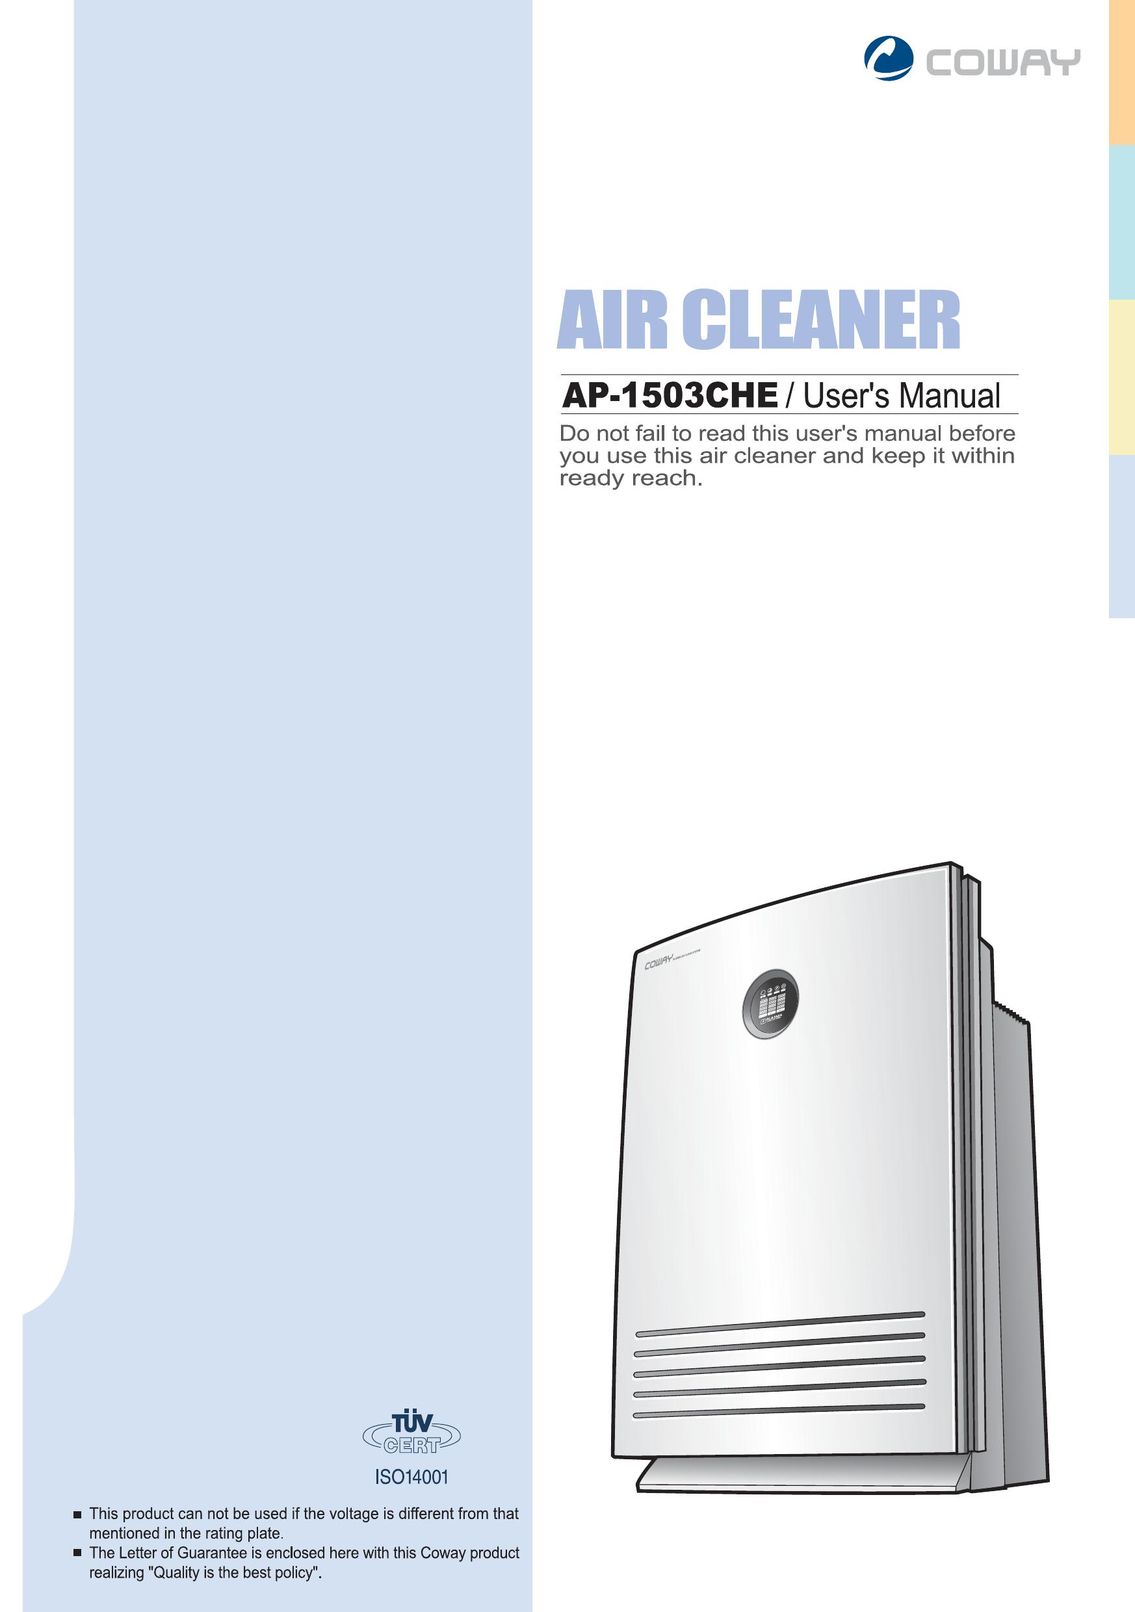 Coway AP-1503CHE Air Cleaner User Manual